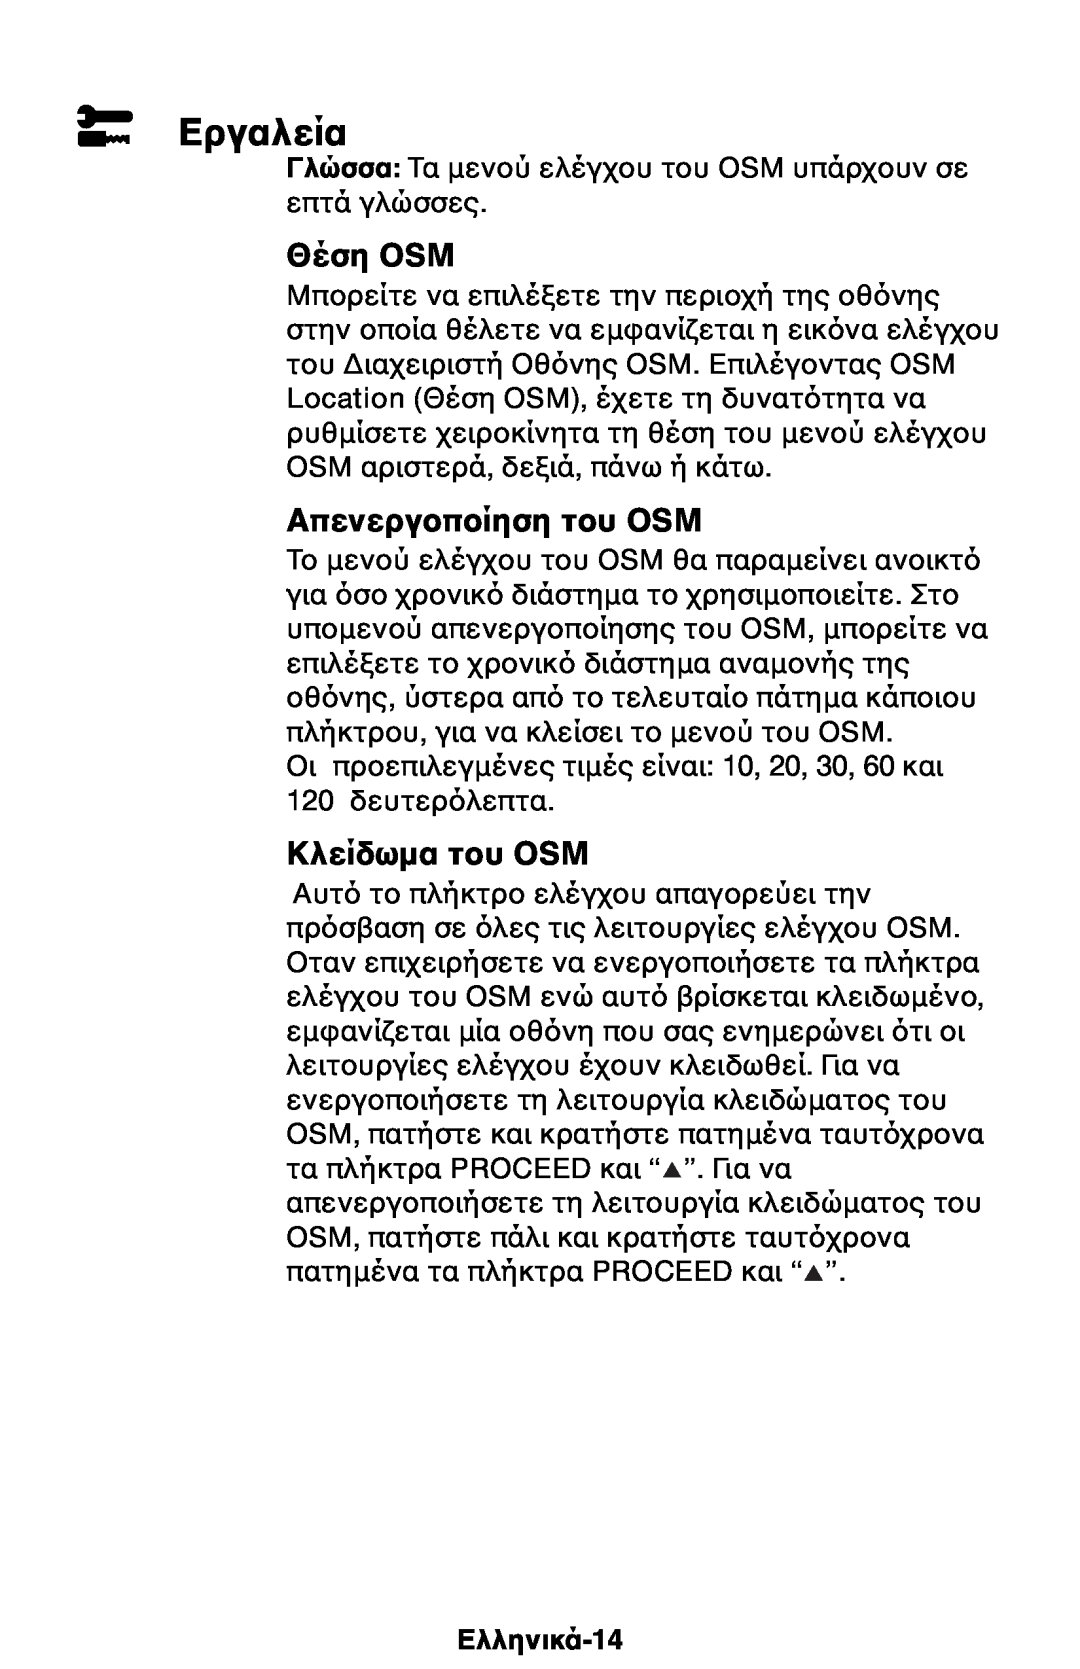 NEC 1525M manual Εργαλεία, Θέση OSM, Απενεργ, Κλείδωµα τ, Ελληνικά-14 